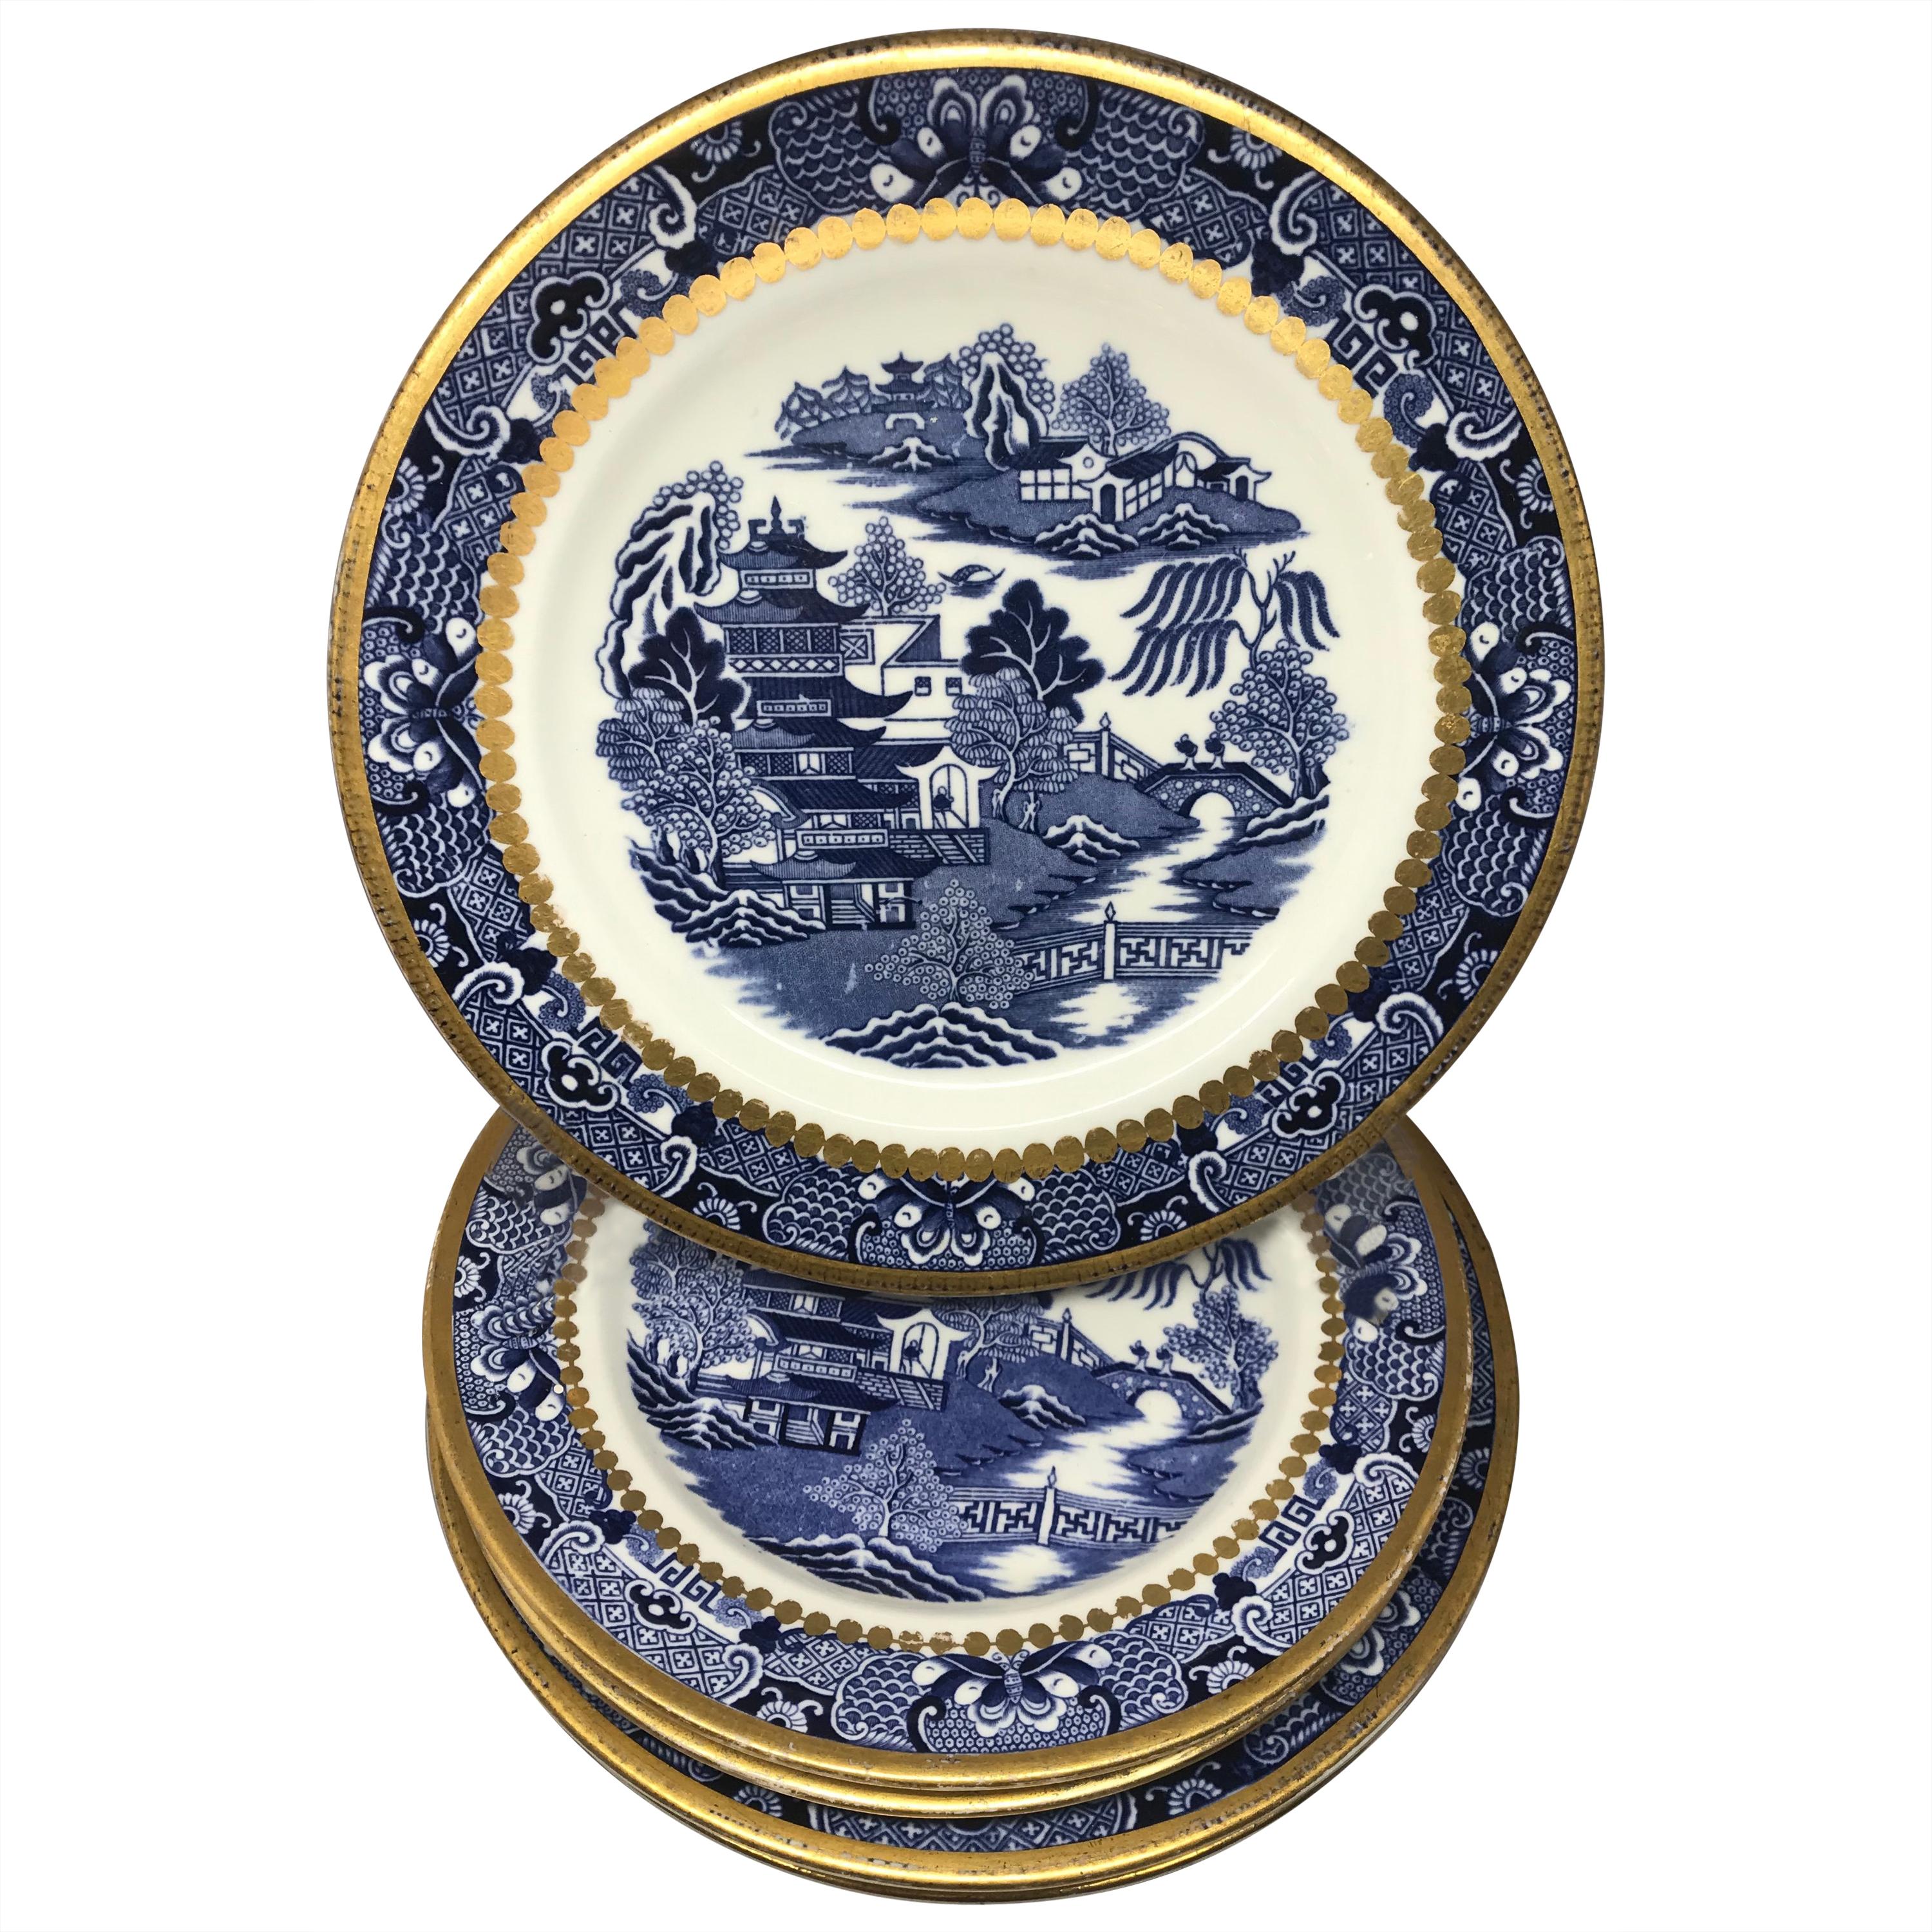 Set of Six Blue and White English Plates